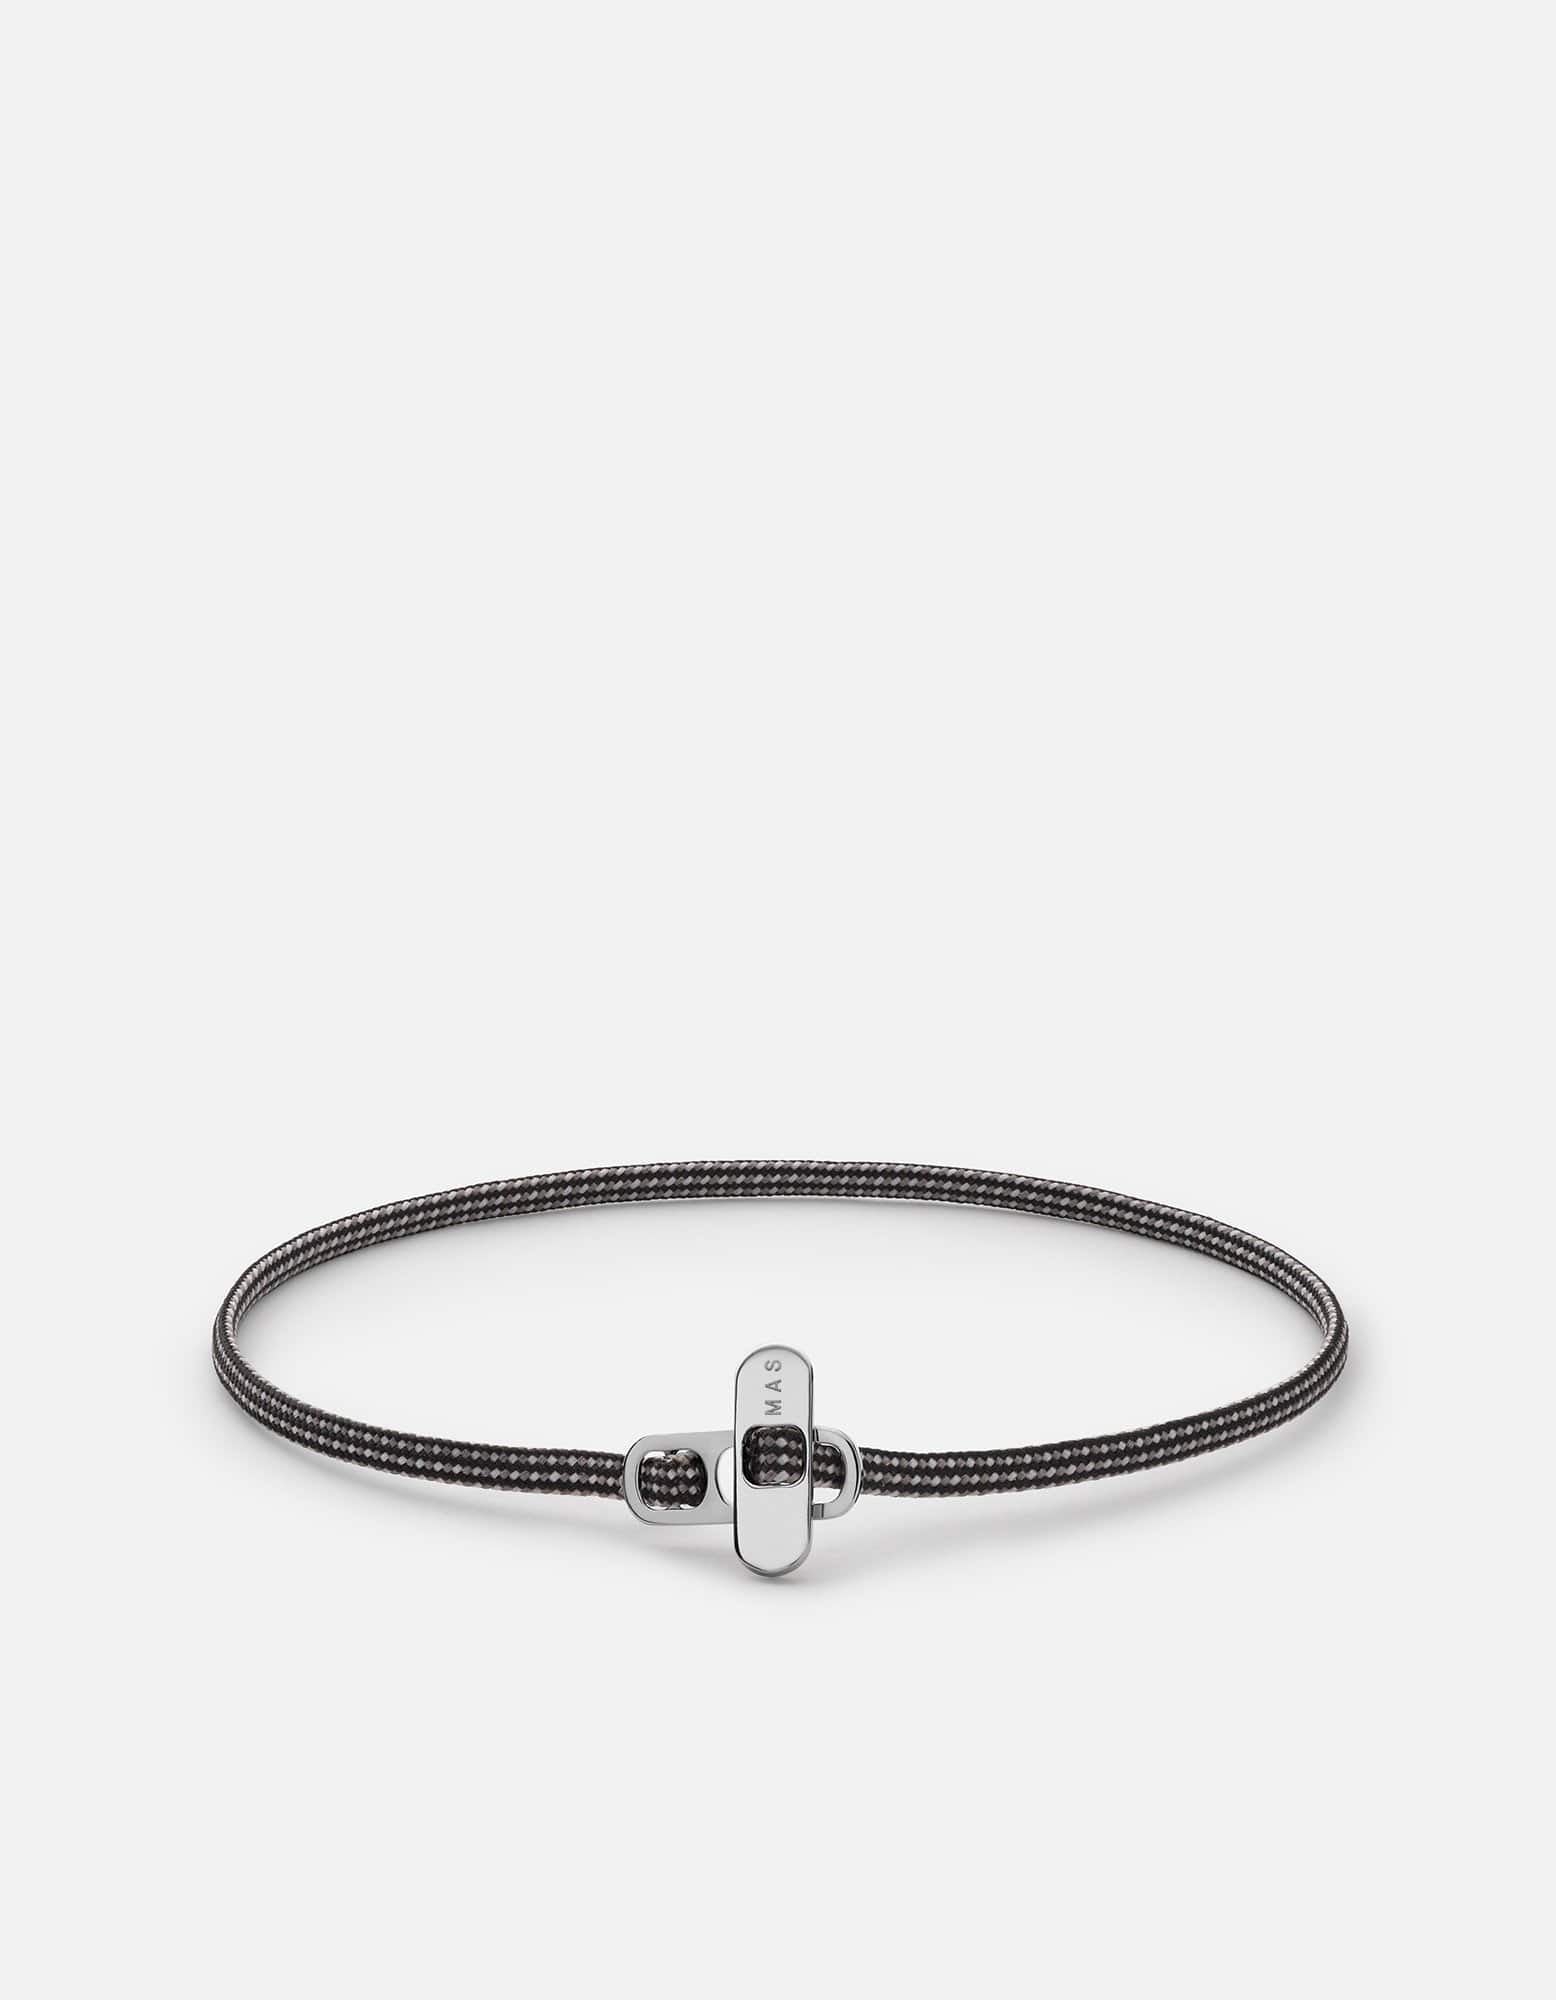 Men's Silver Rope Bracelet (2.5mm) - Silver Bracelet For Men